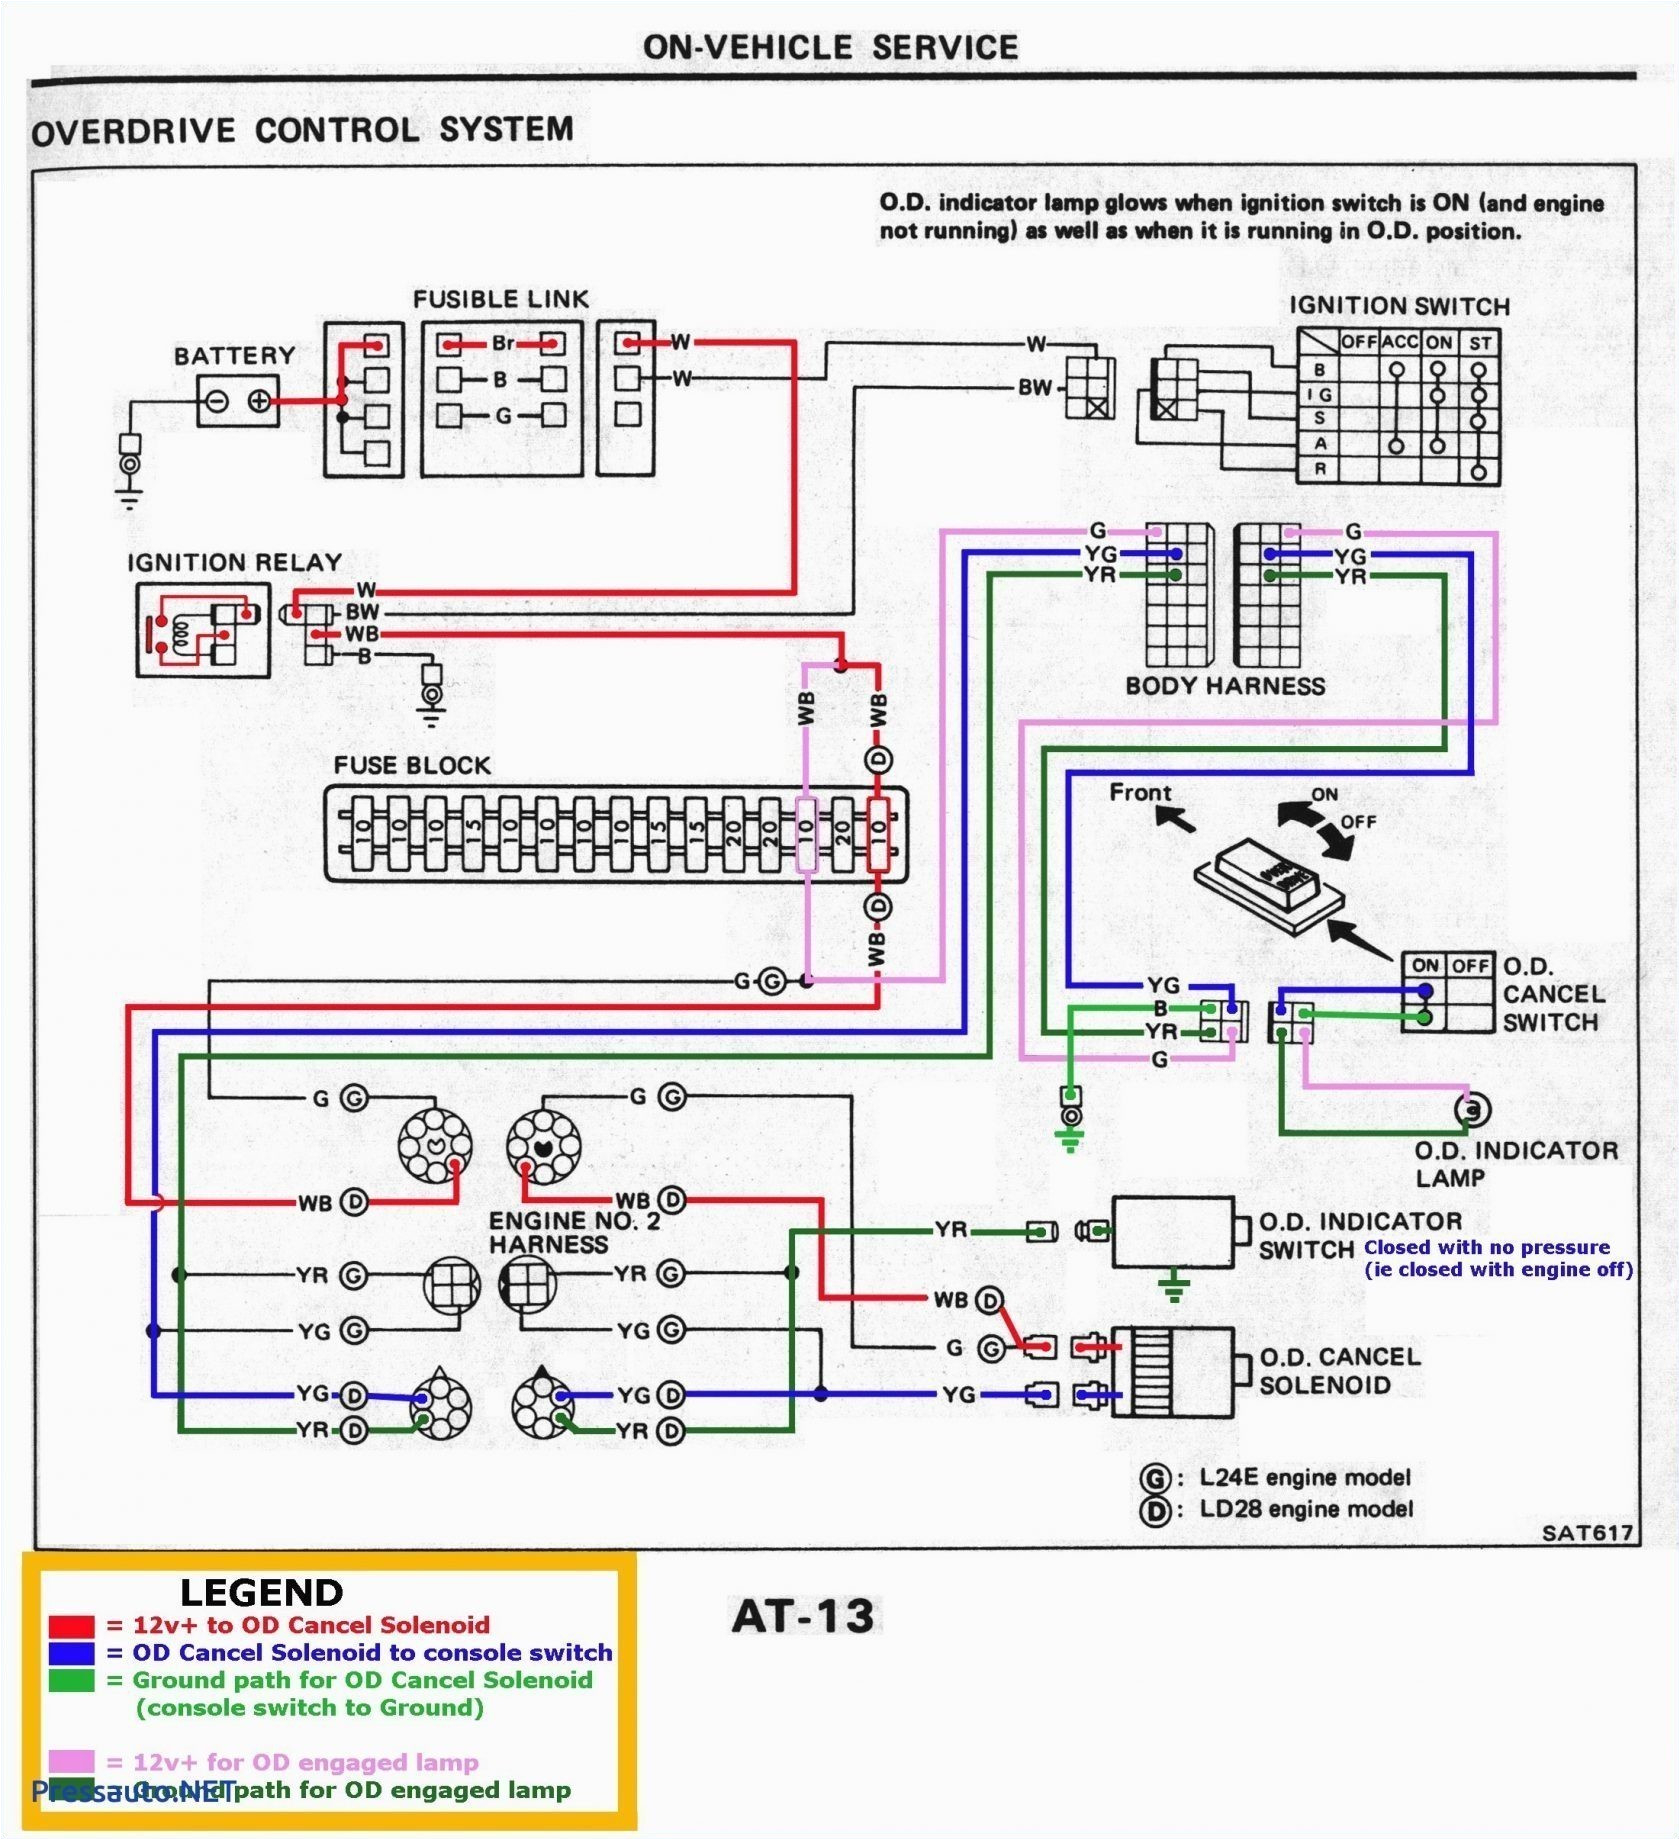 wiring diagram symbols best of 1995 ford f150 radio wiring diagram ford f150 fan wiring diagram